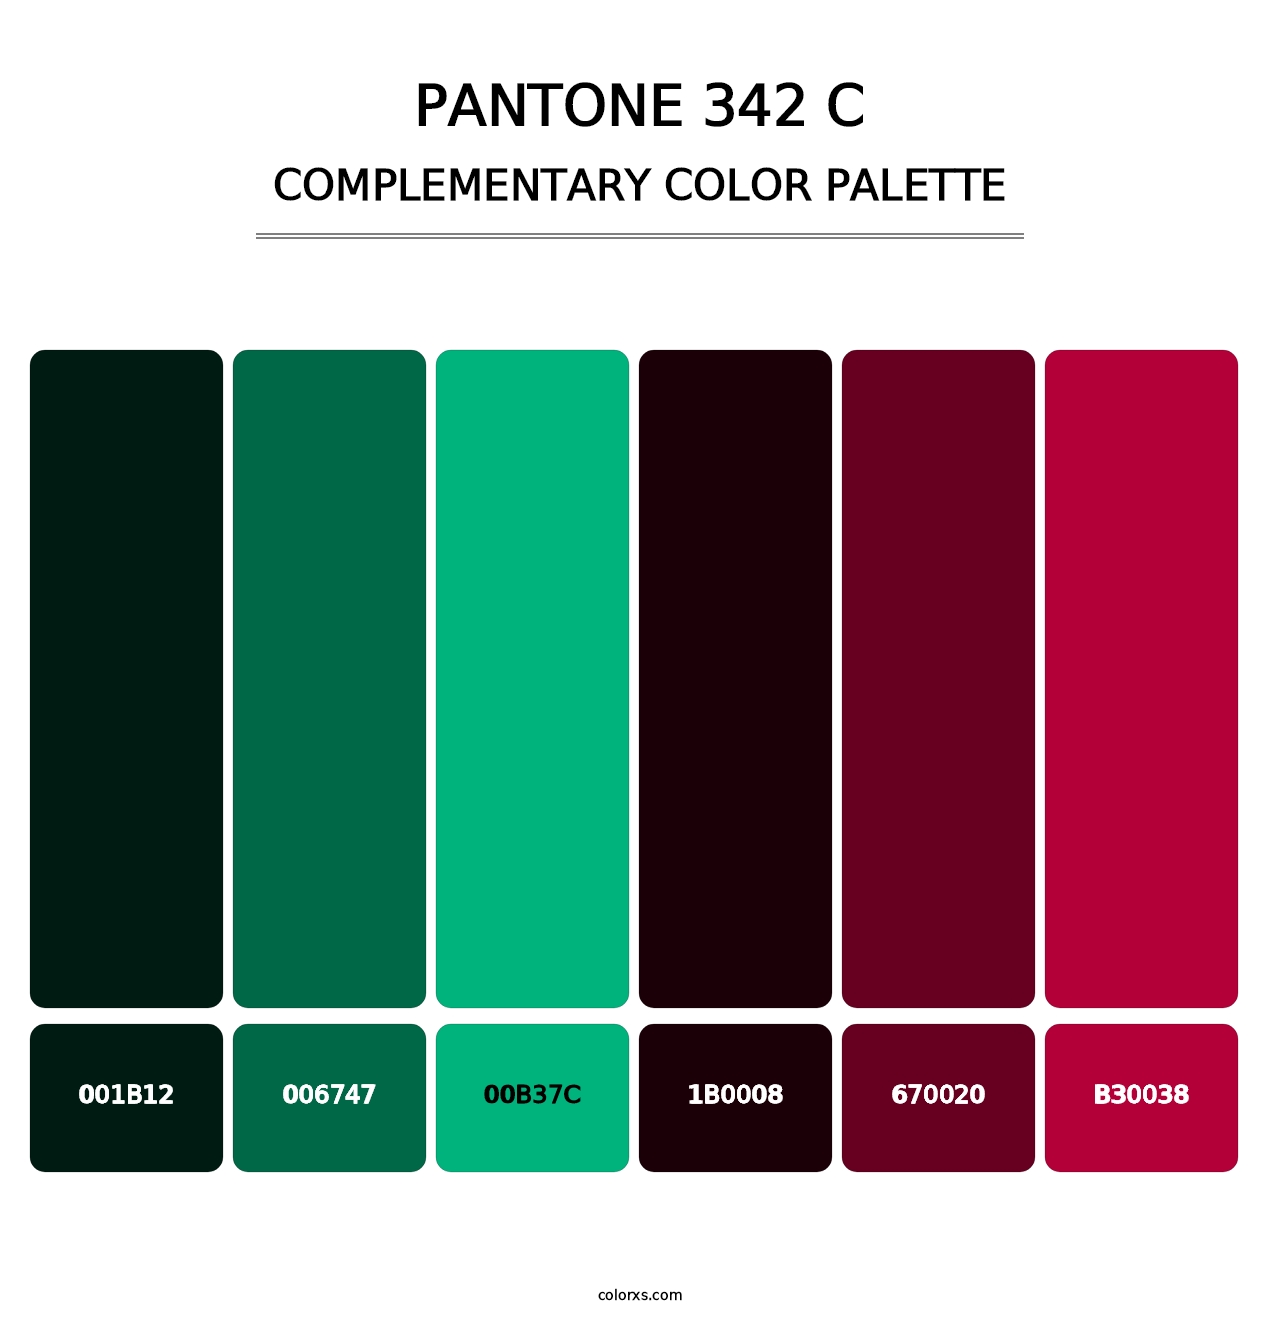 PANTONE 342 C - Complementary Color Palette